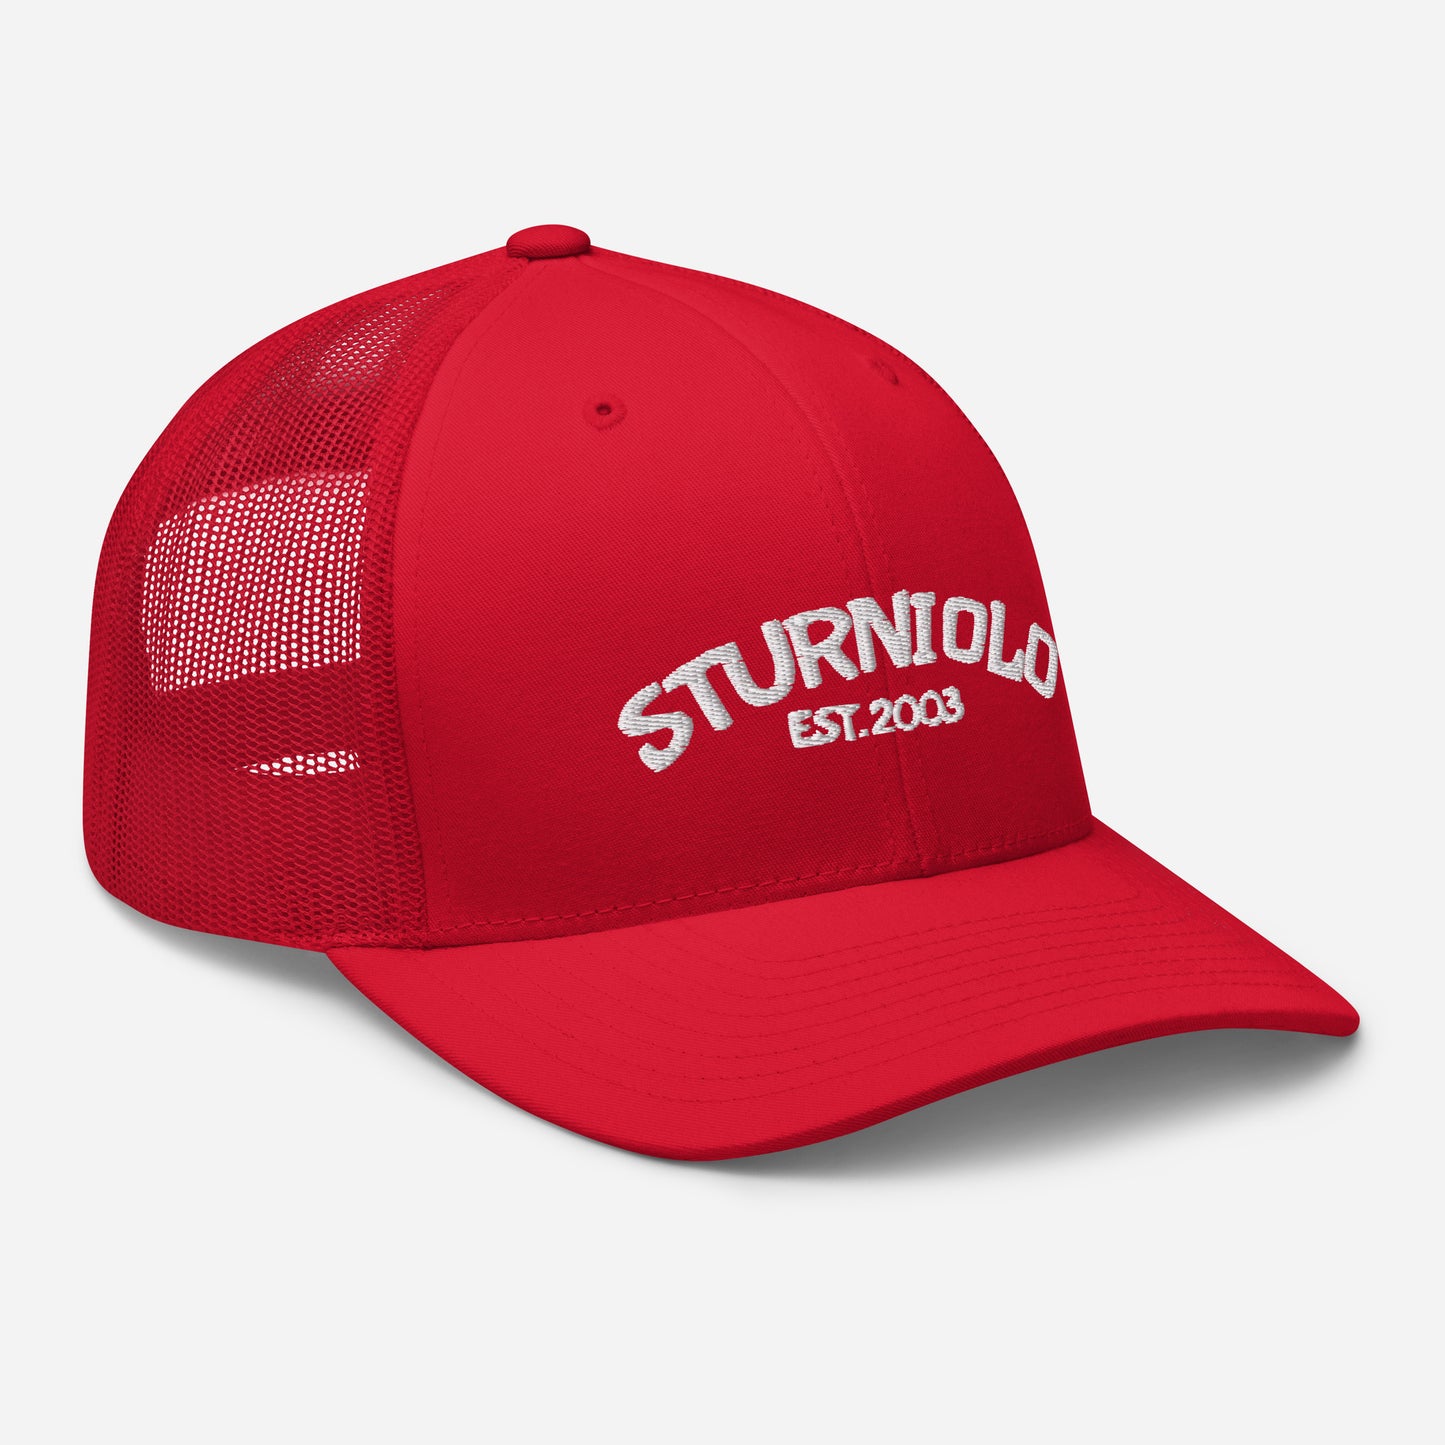 Sturniolo Triplets Trucker Cap